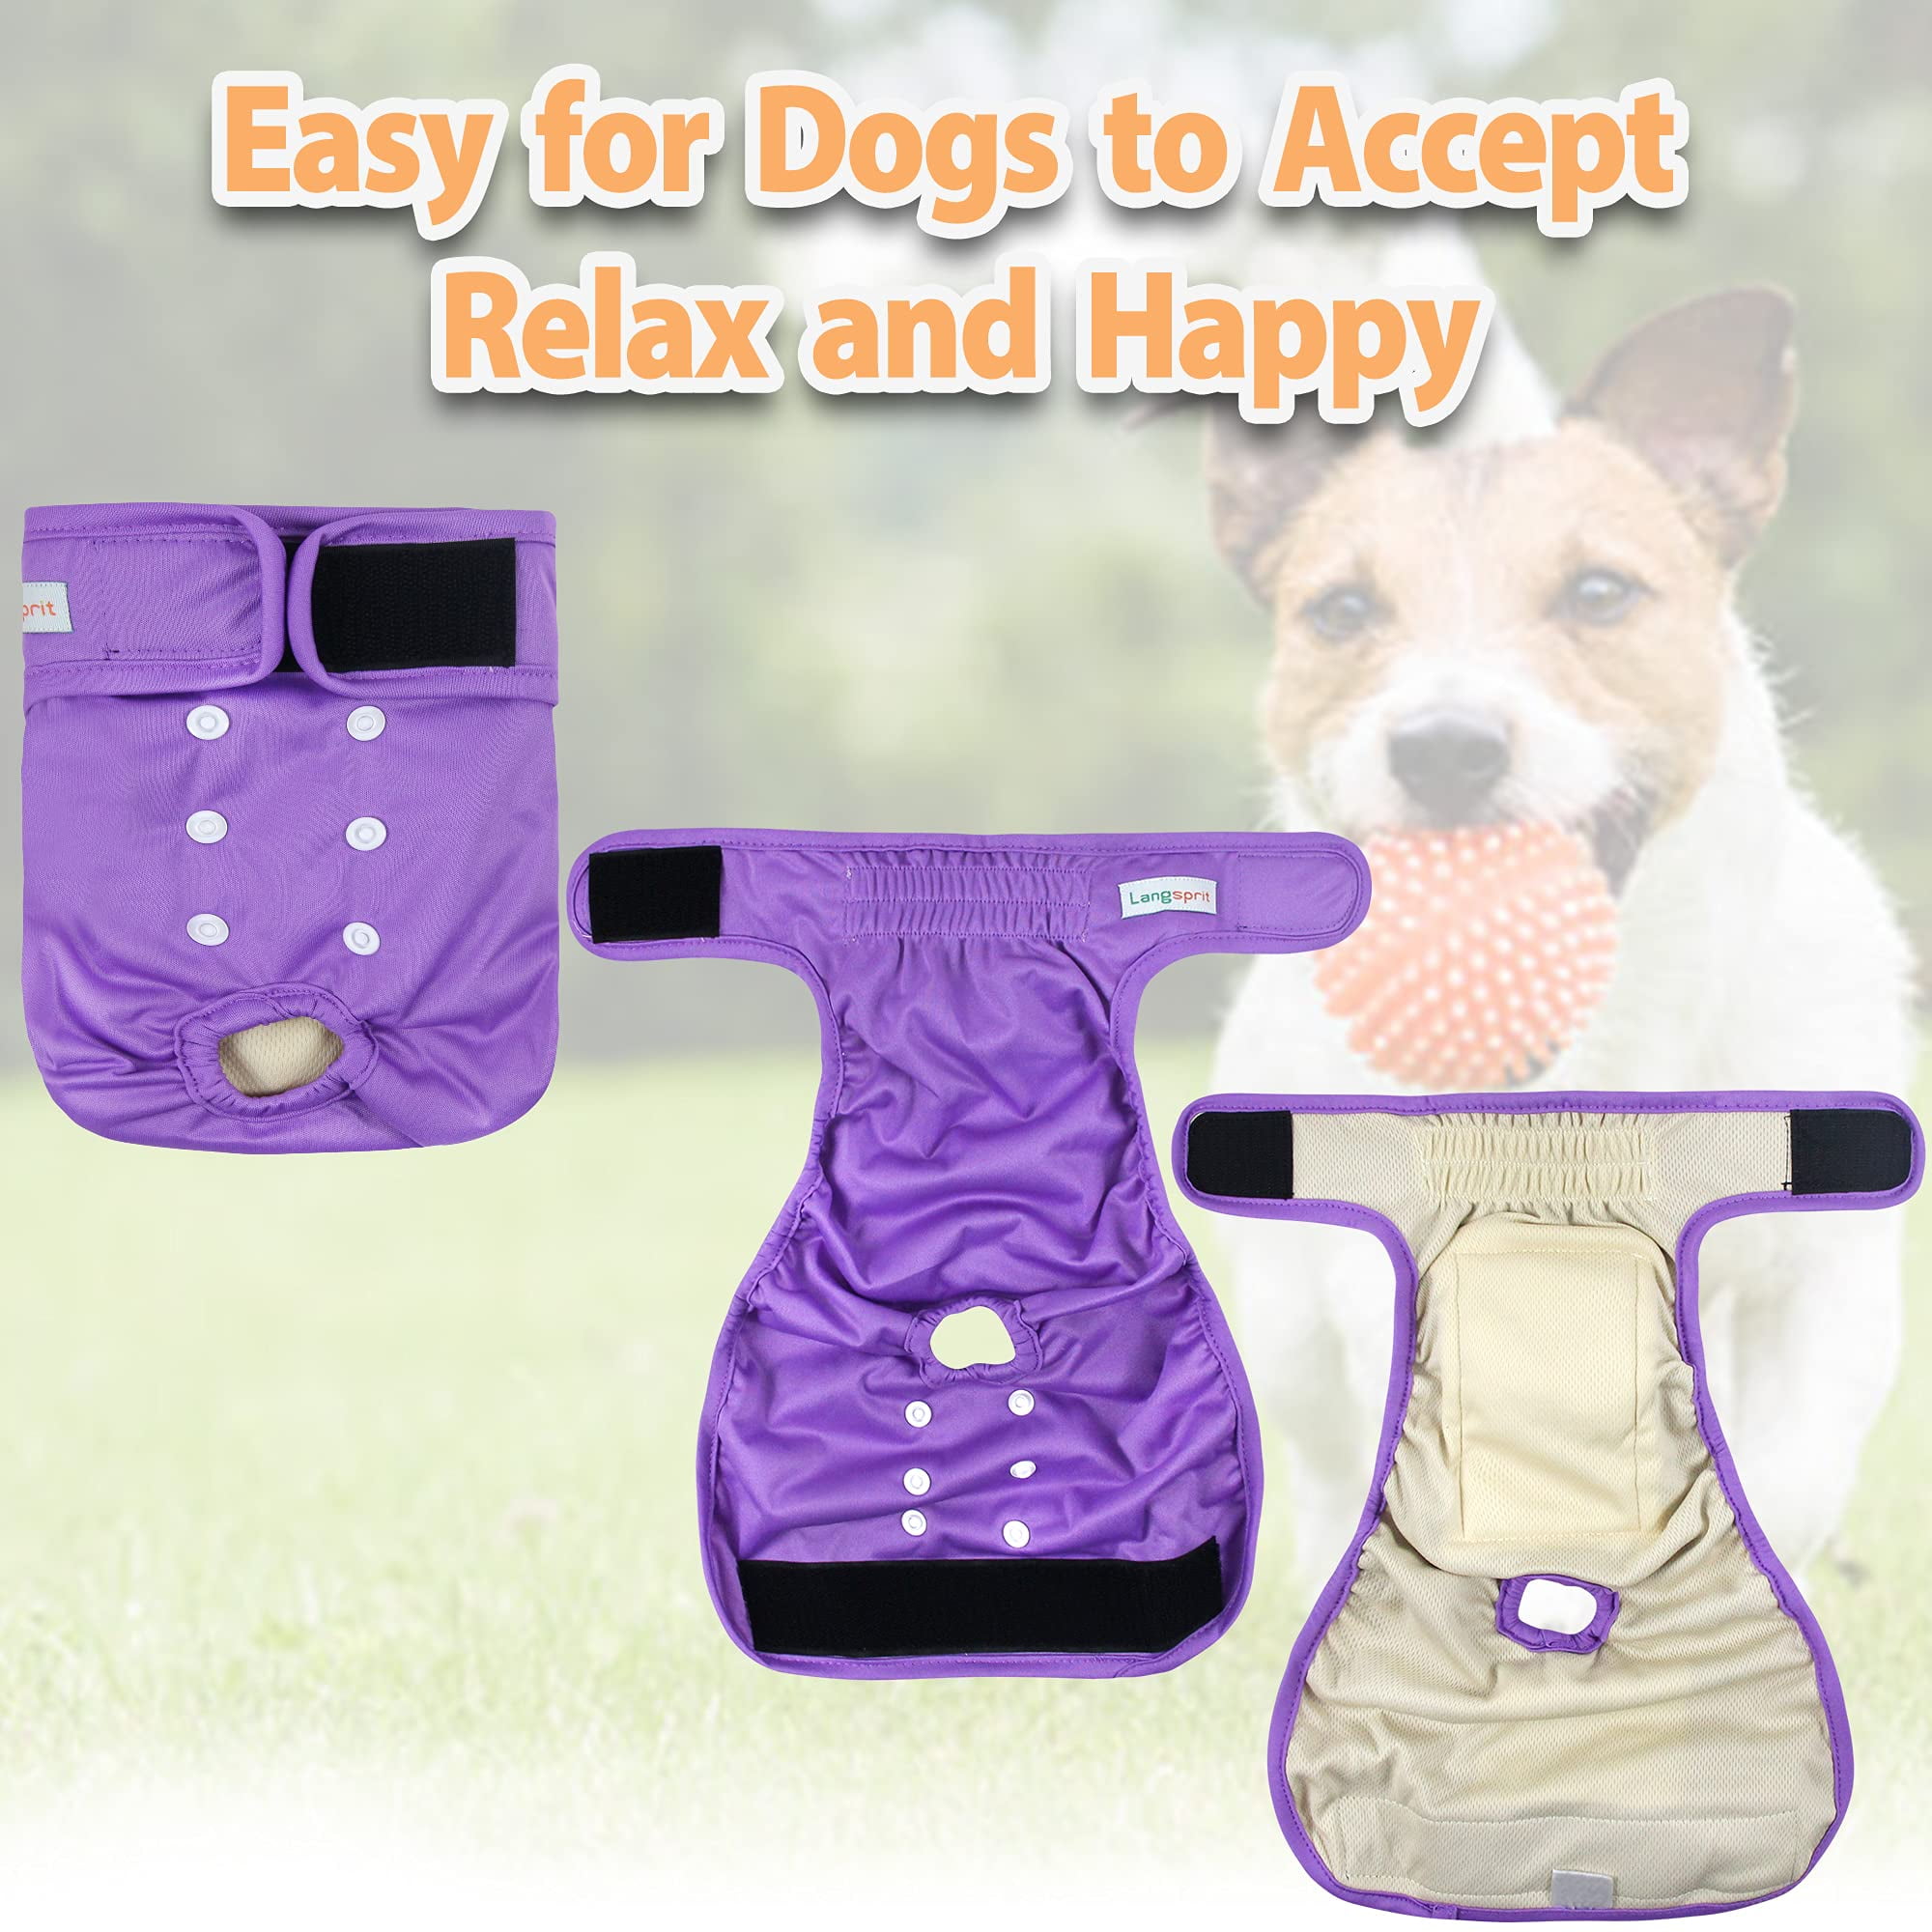 Langsprit Washable Female Dog Diapers (3 Pack) - No Leak Reusable